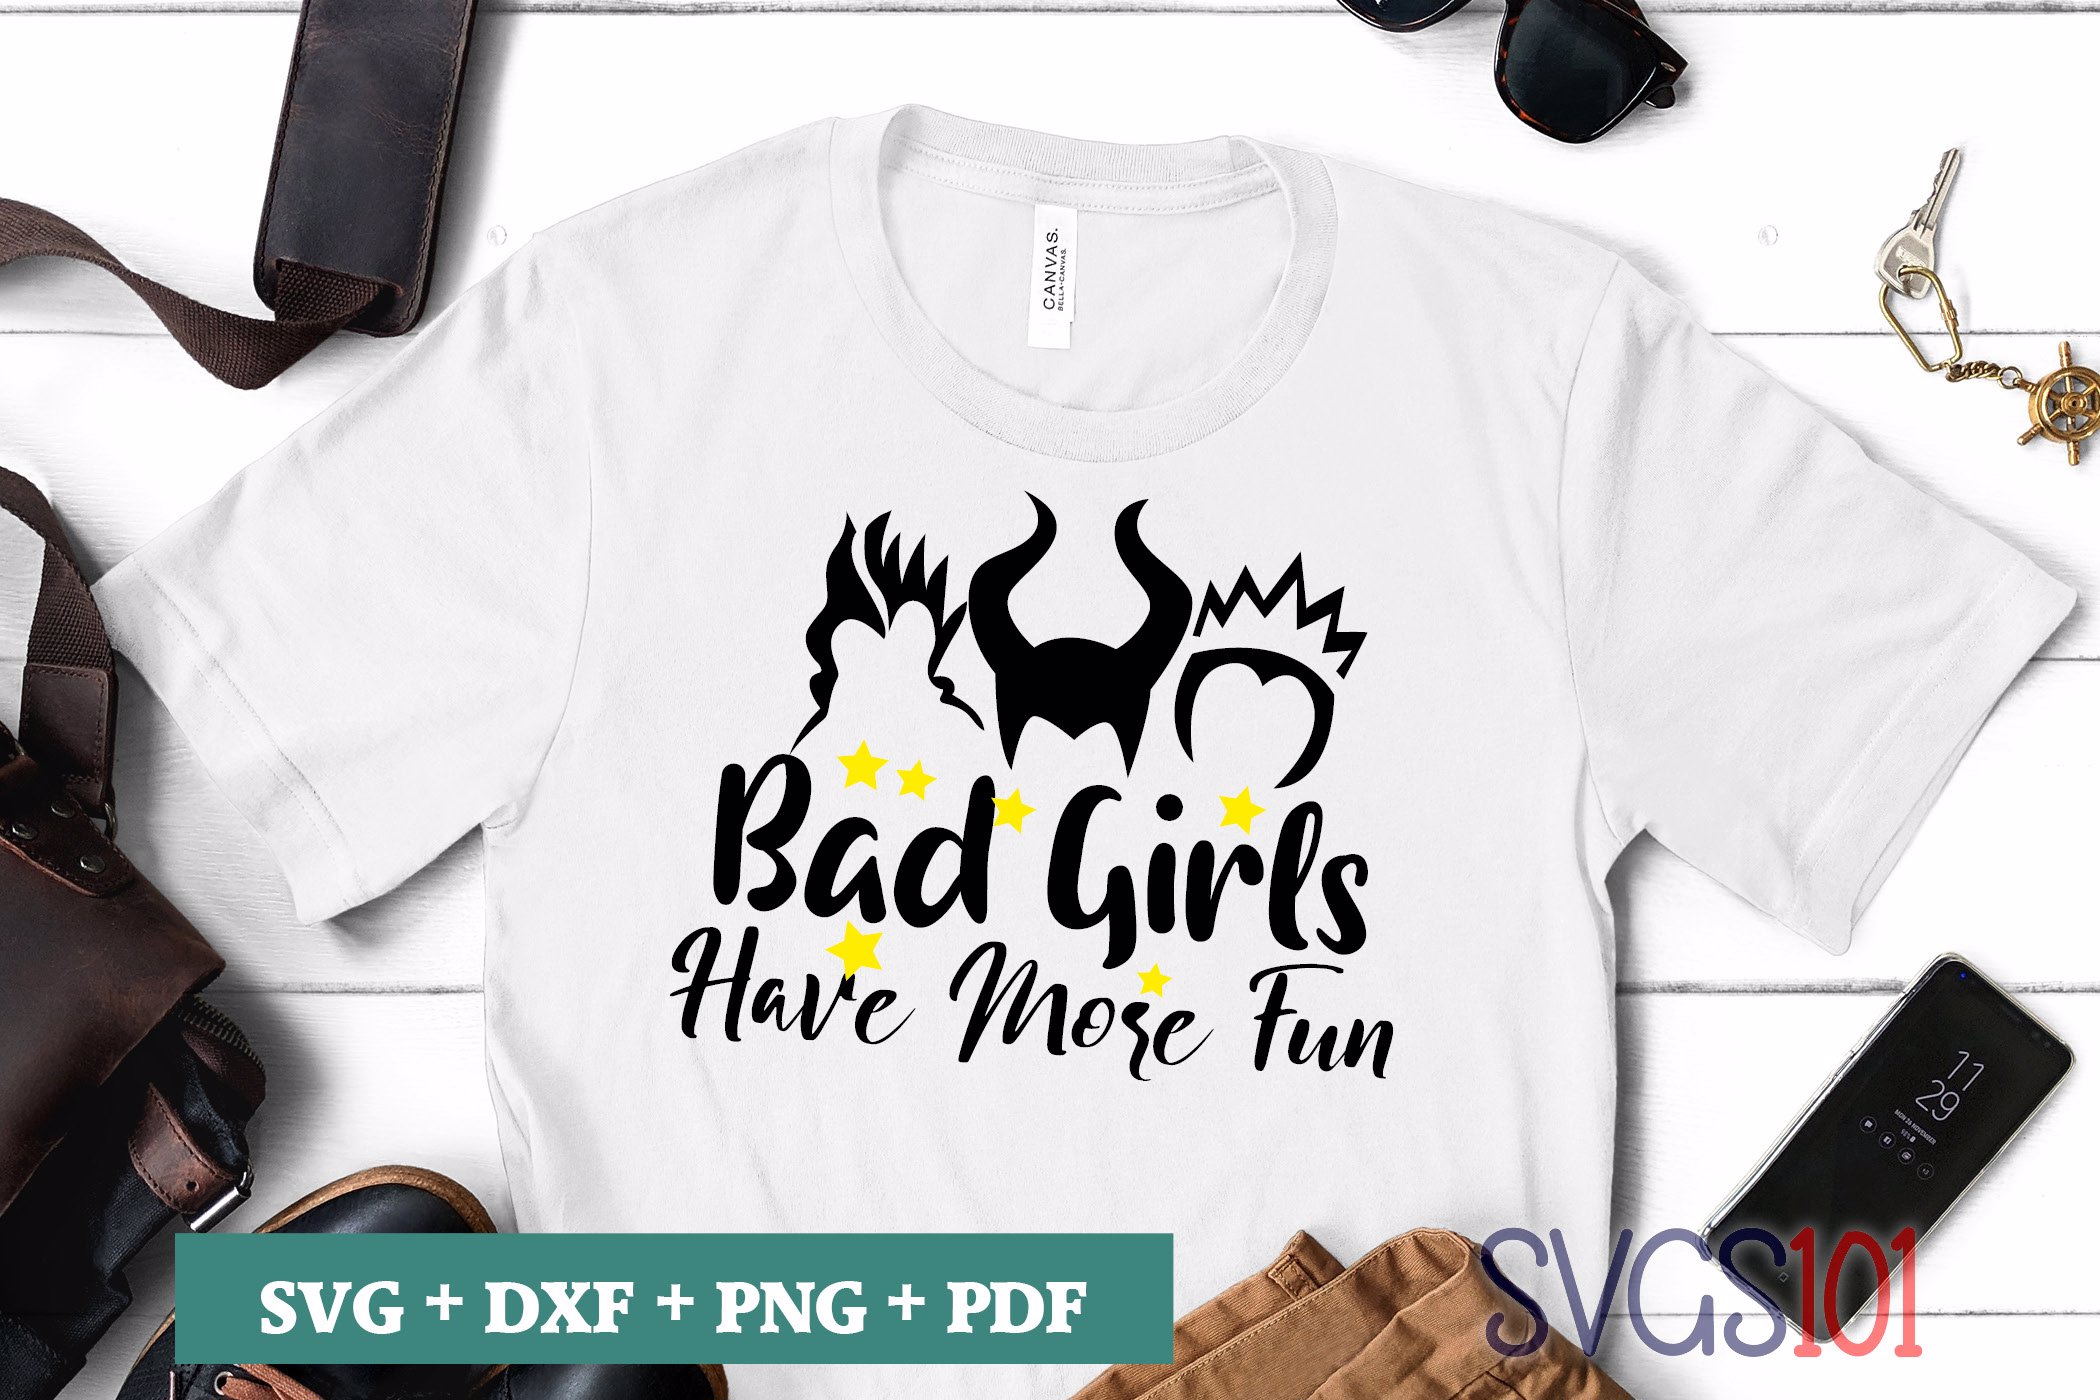 Bad Girls Have More Fun